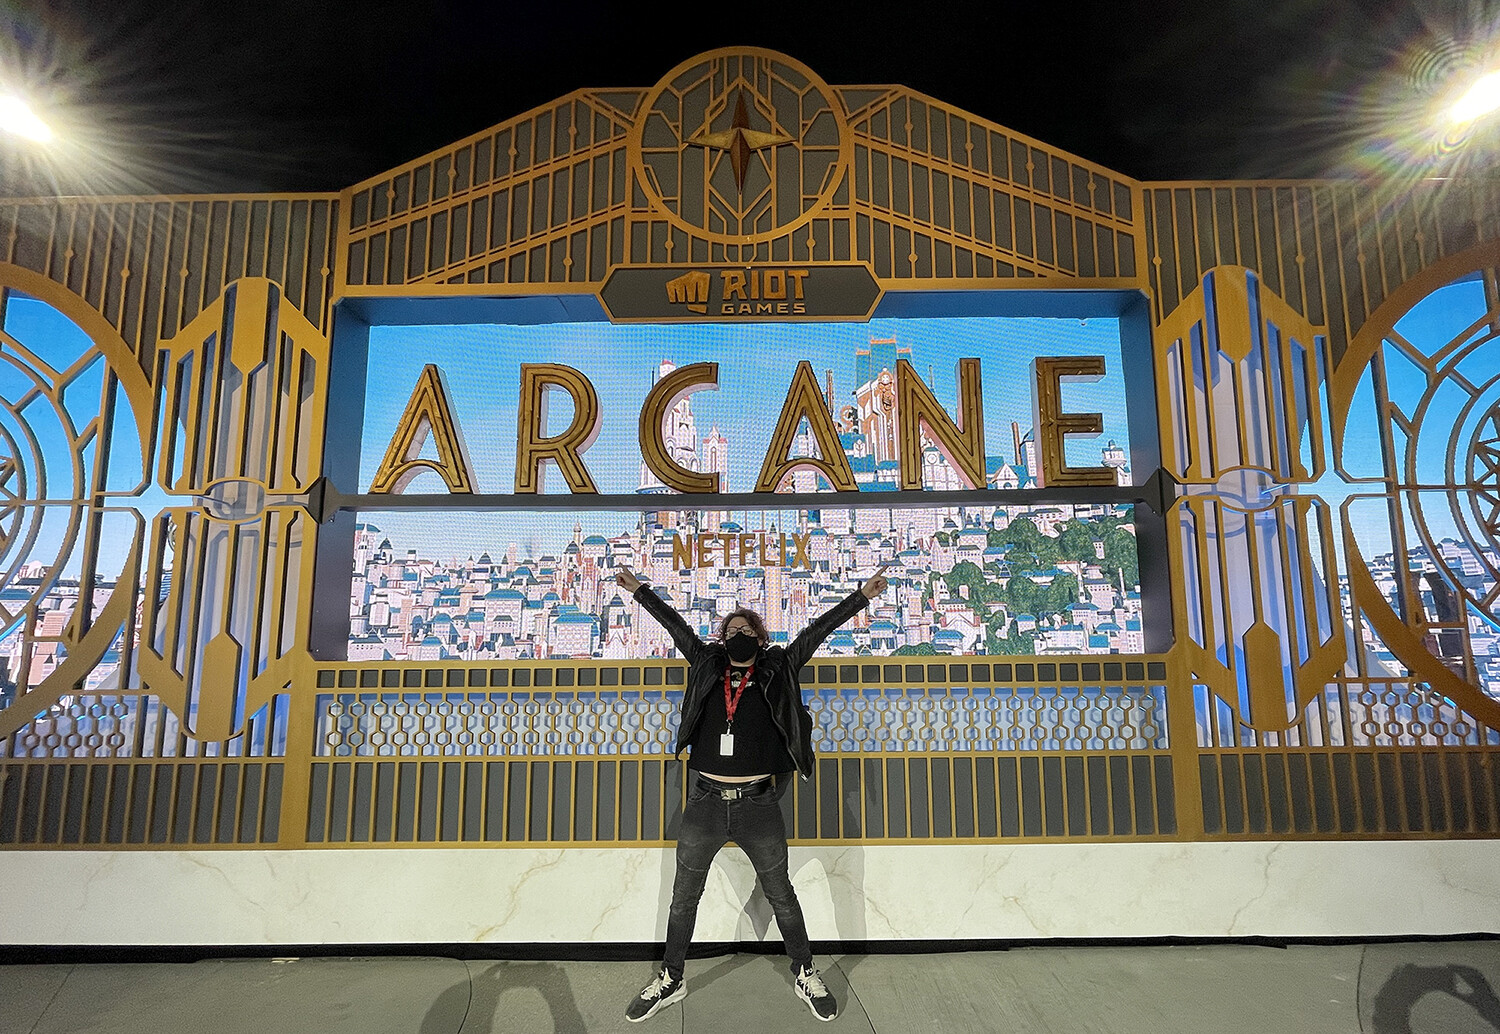 Arcane premiere at Riot Games campus